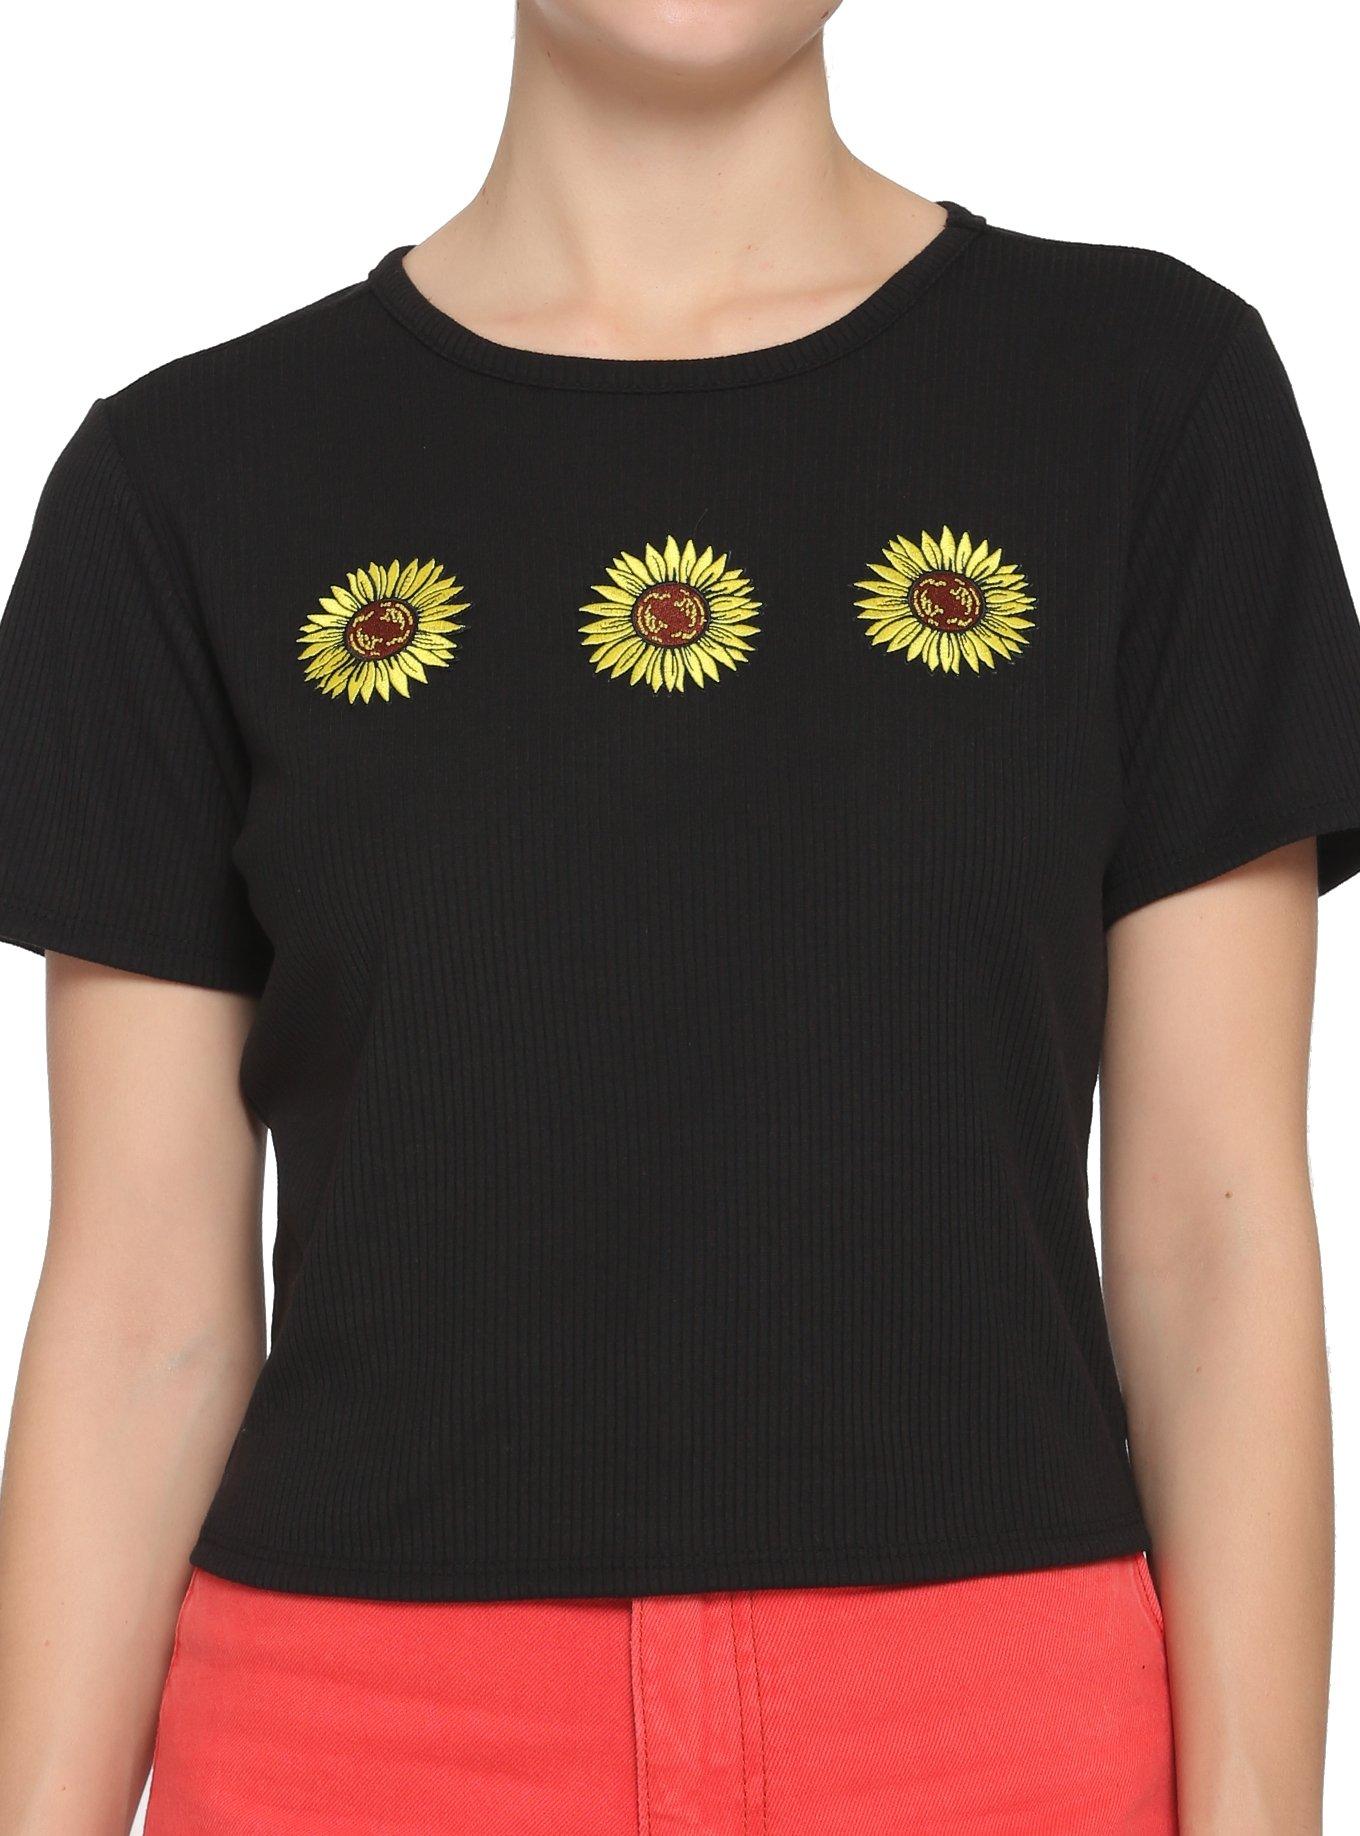 Embroidered Sunflower Girls Crop Baby T-Shirt, BLACK, hi-res